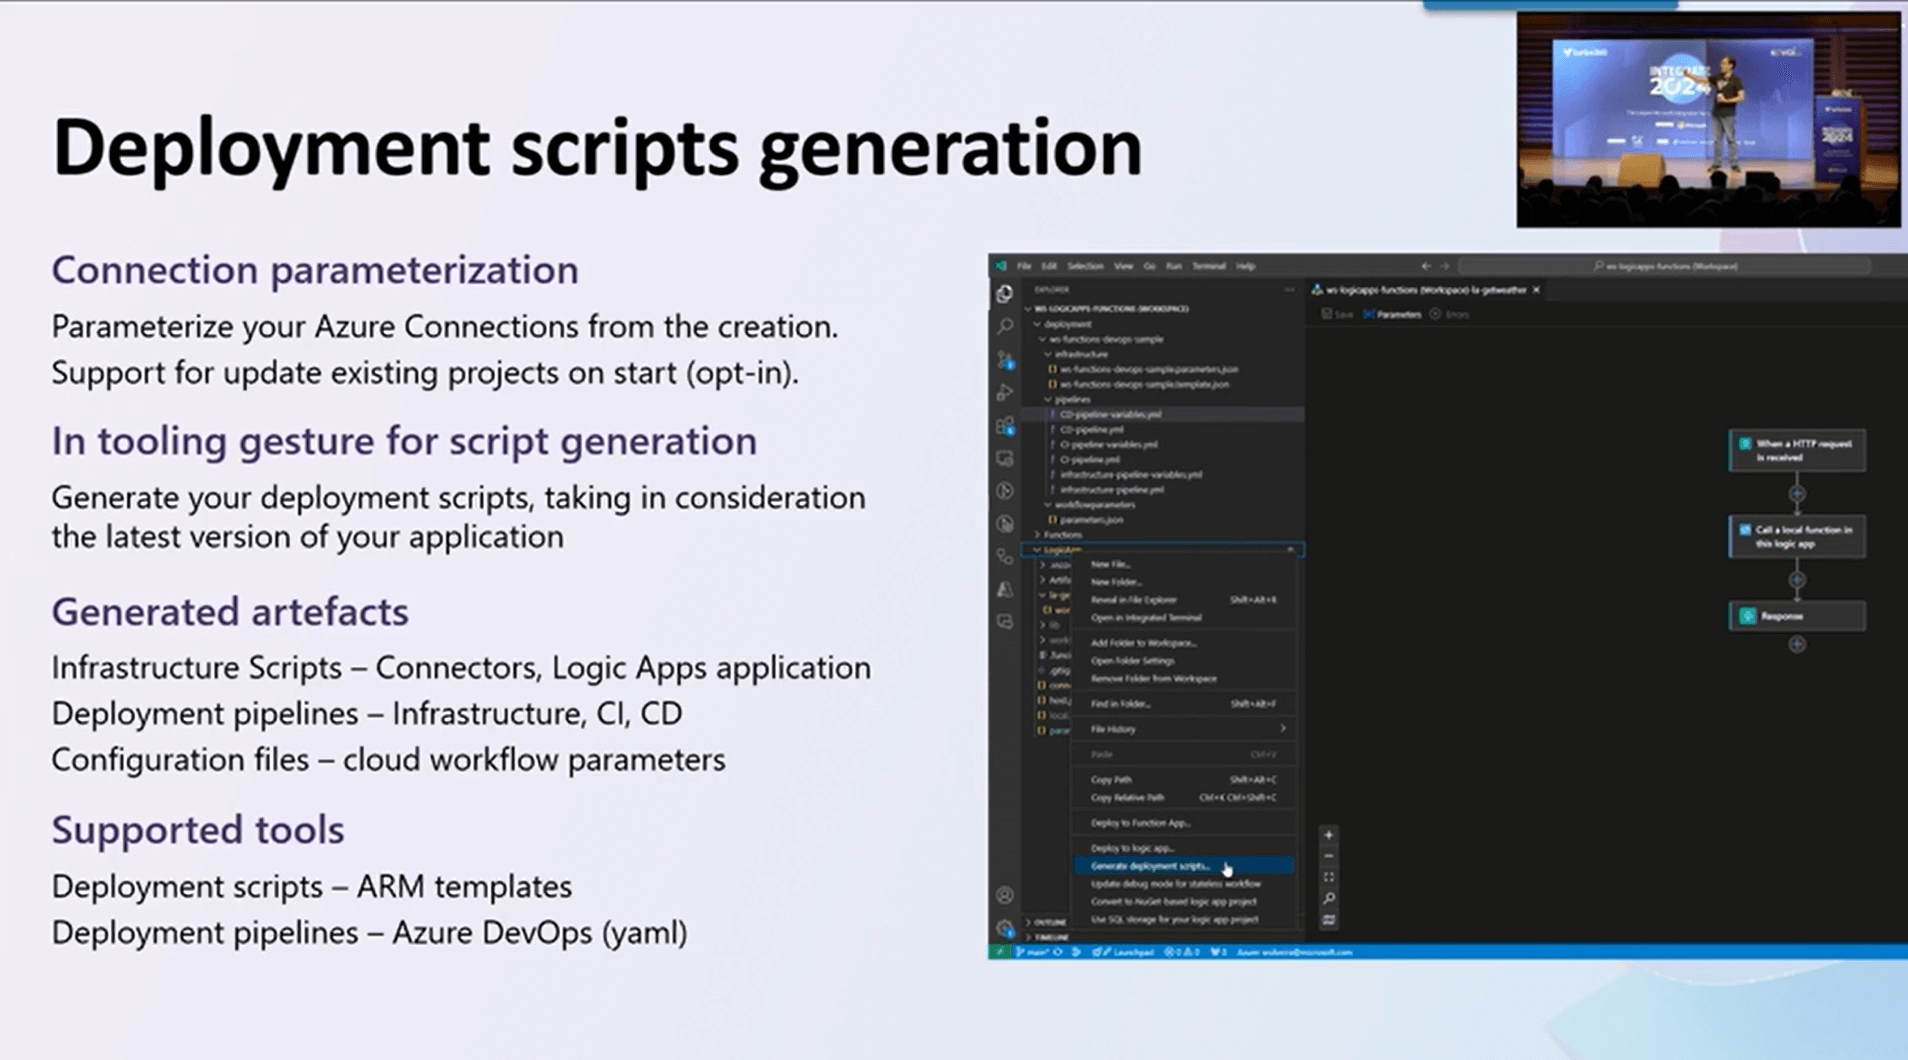 Generating deployment scripts